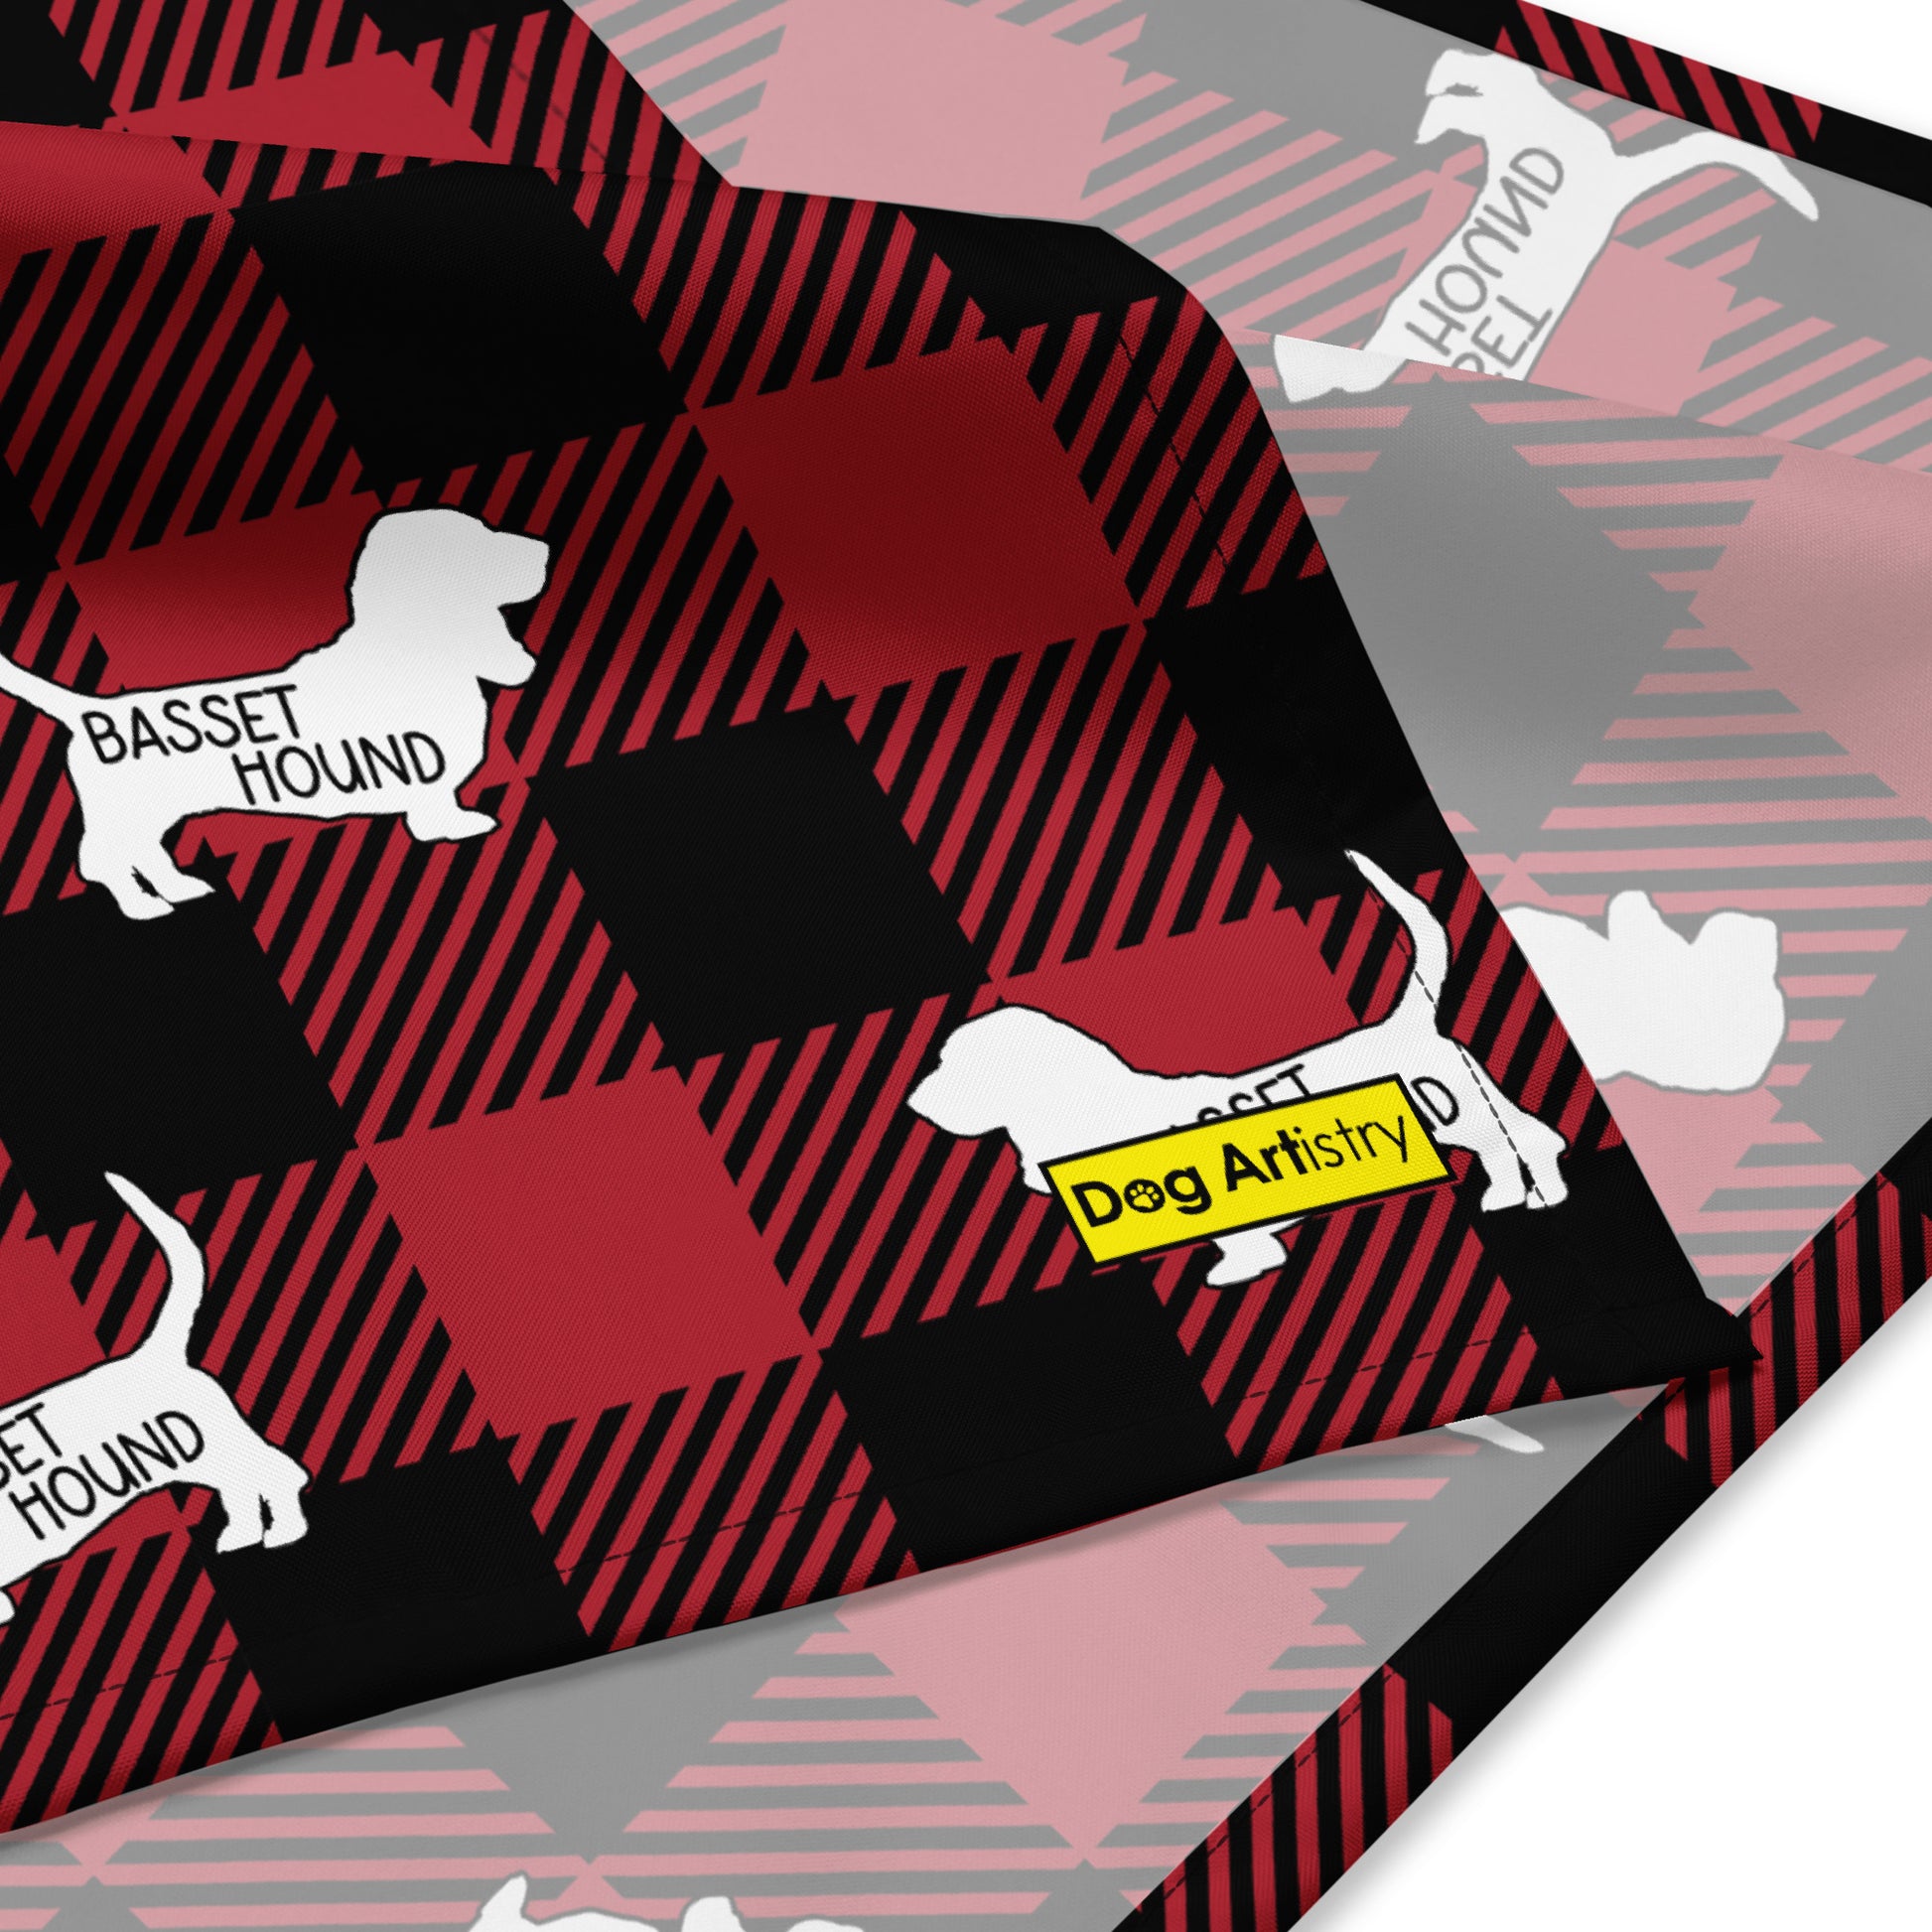 Basset Hound dark red plaid bandana by Dog Artistry. Close up.